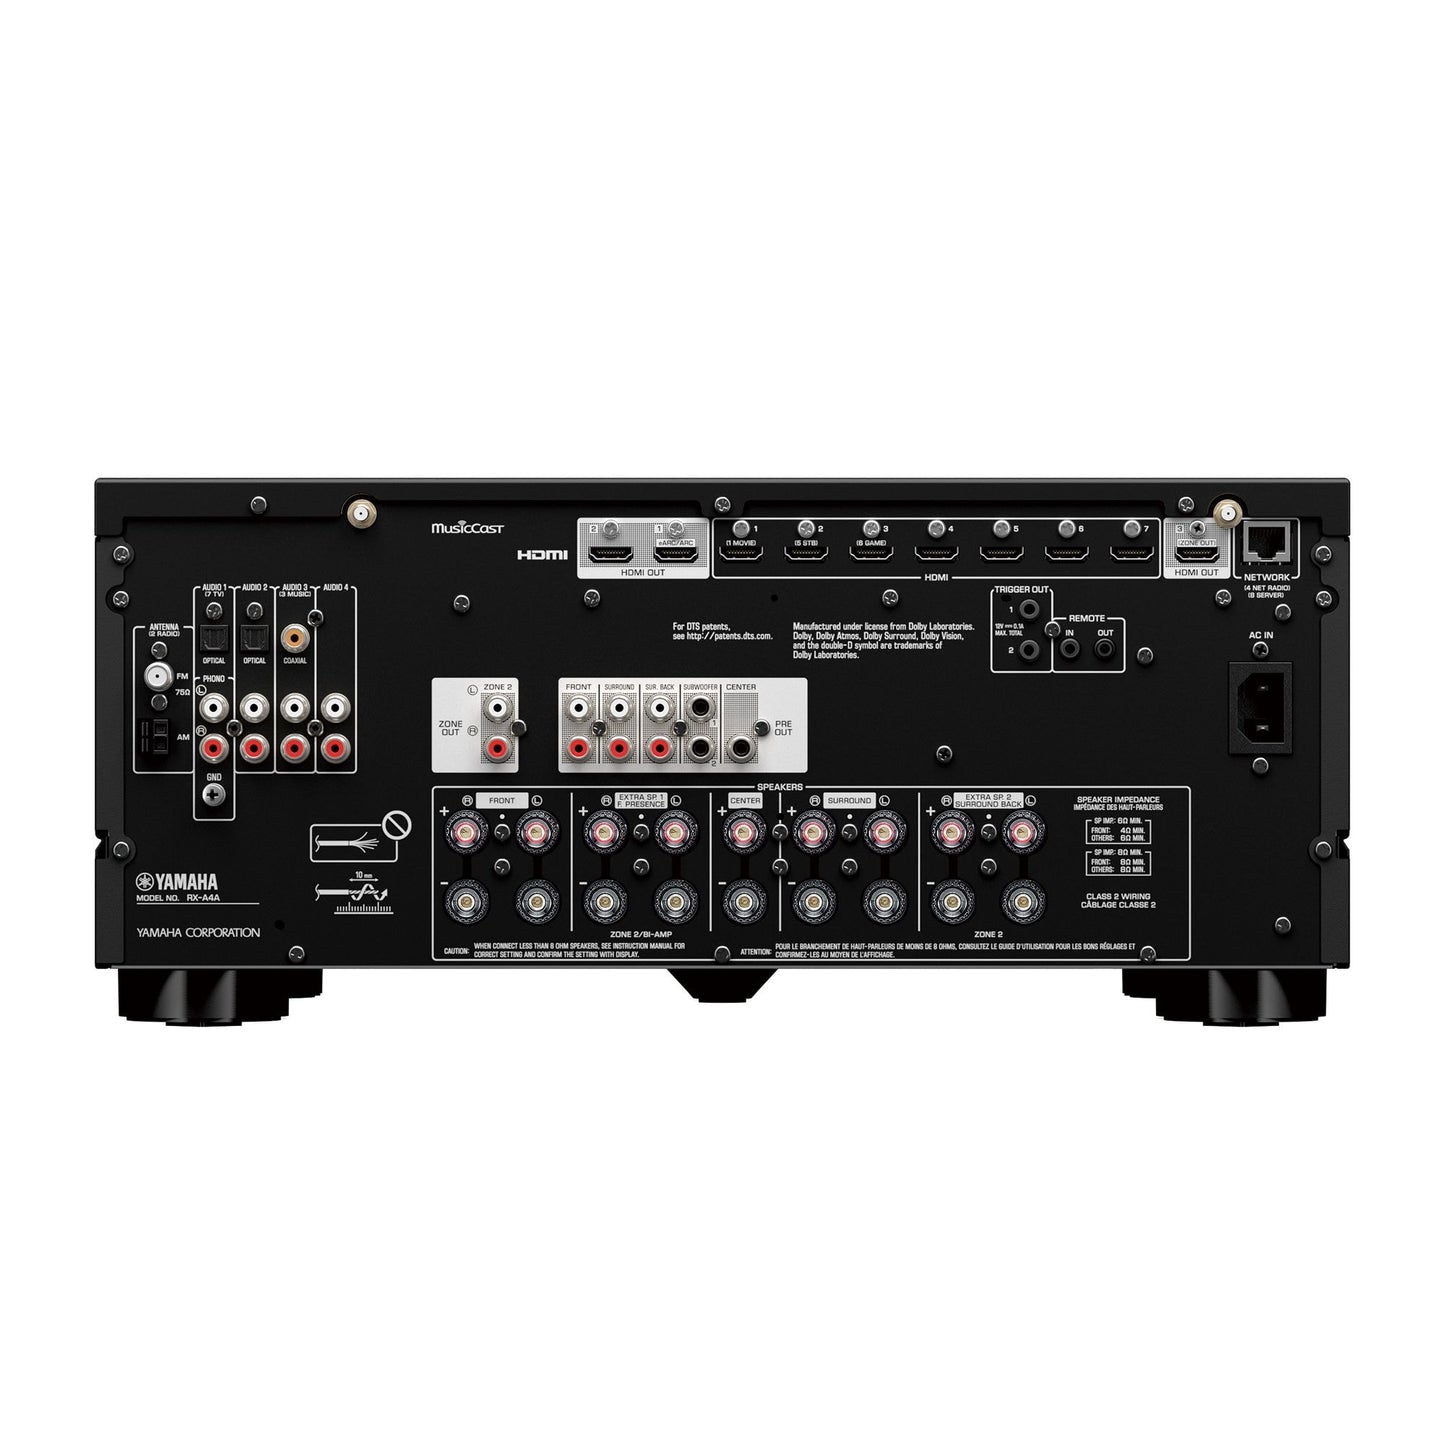 Yamaha RX-A4A 7.2-Channel Receiver (Black) +t GMI AUDIO BD-A1500 – BLU-RAY PLAYER (Black)